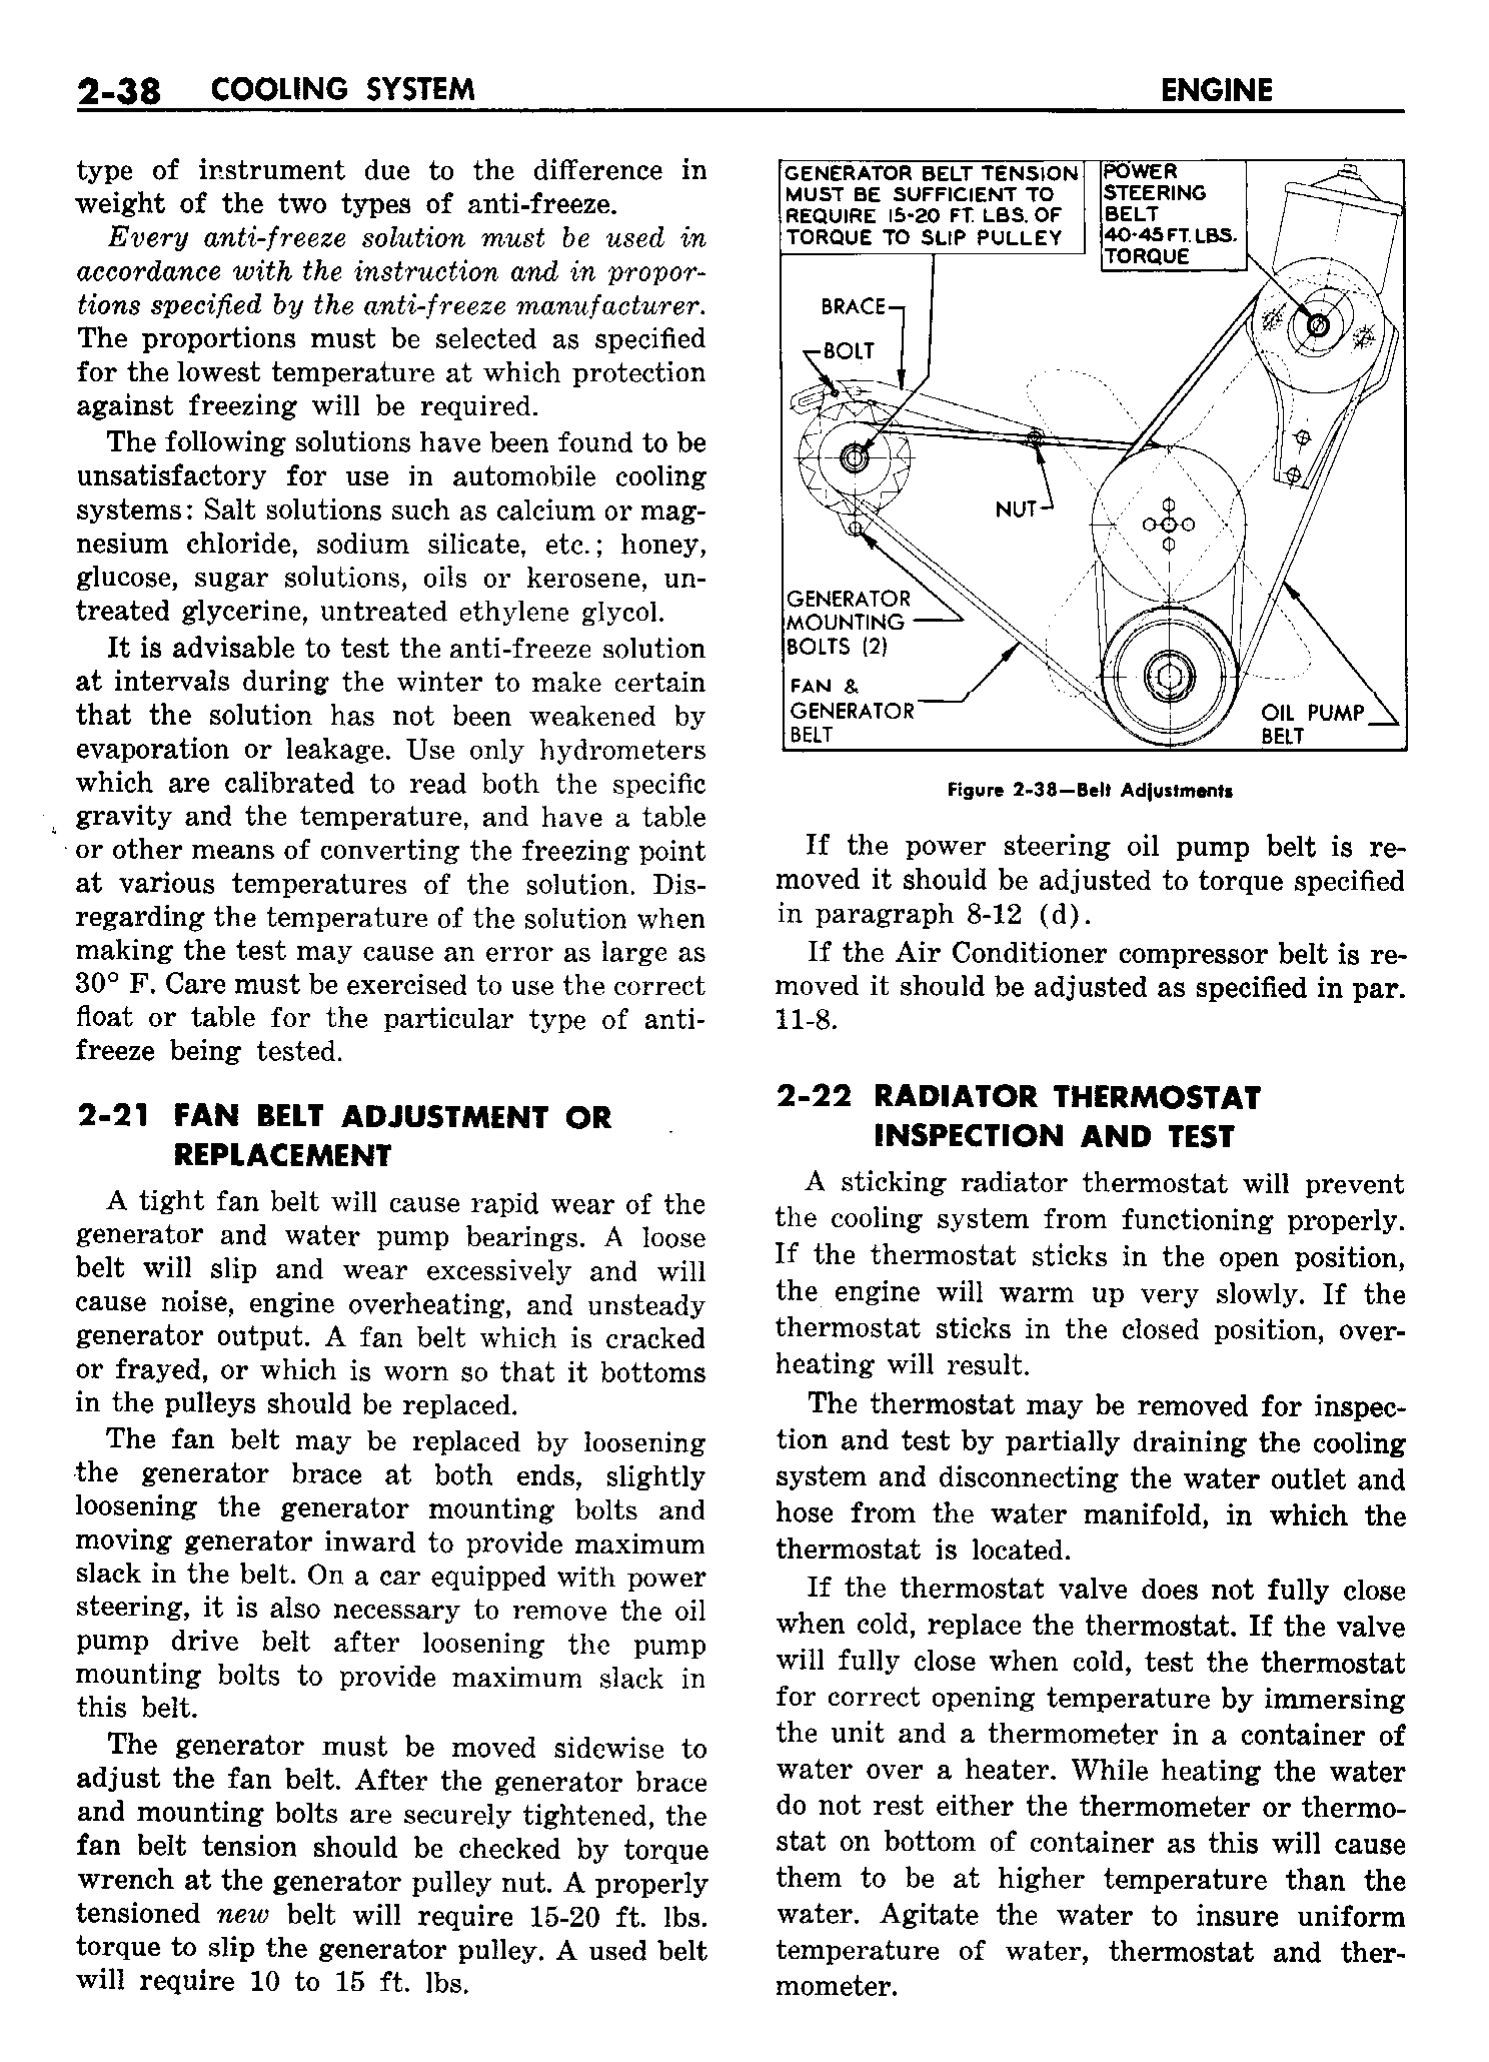 n_03 1958 Buick Shop Manual - Engine_38.jpg